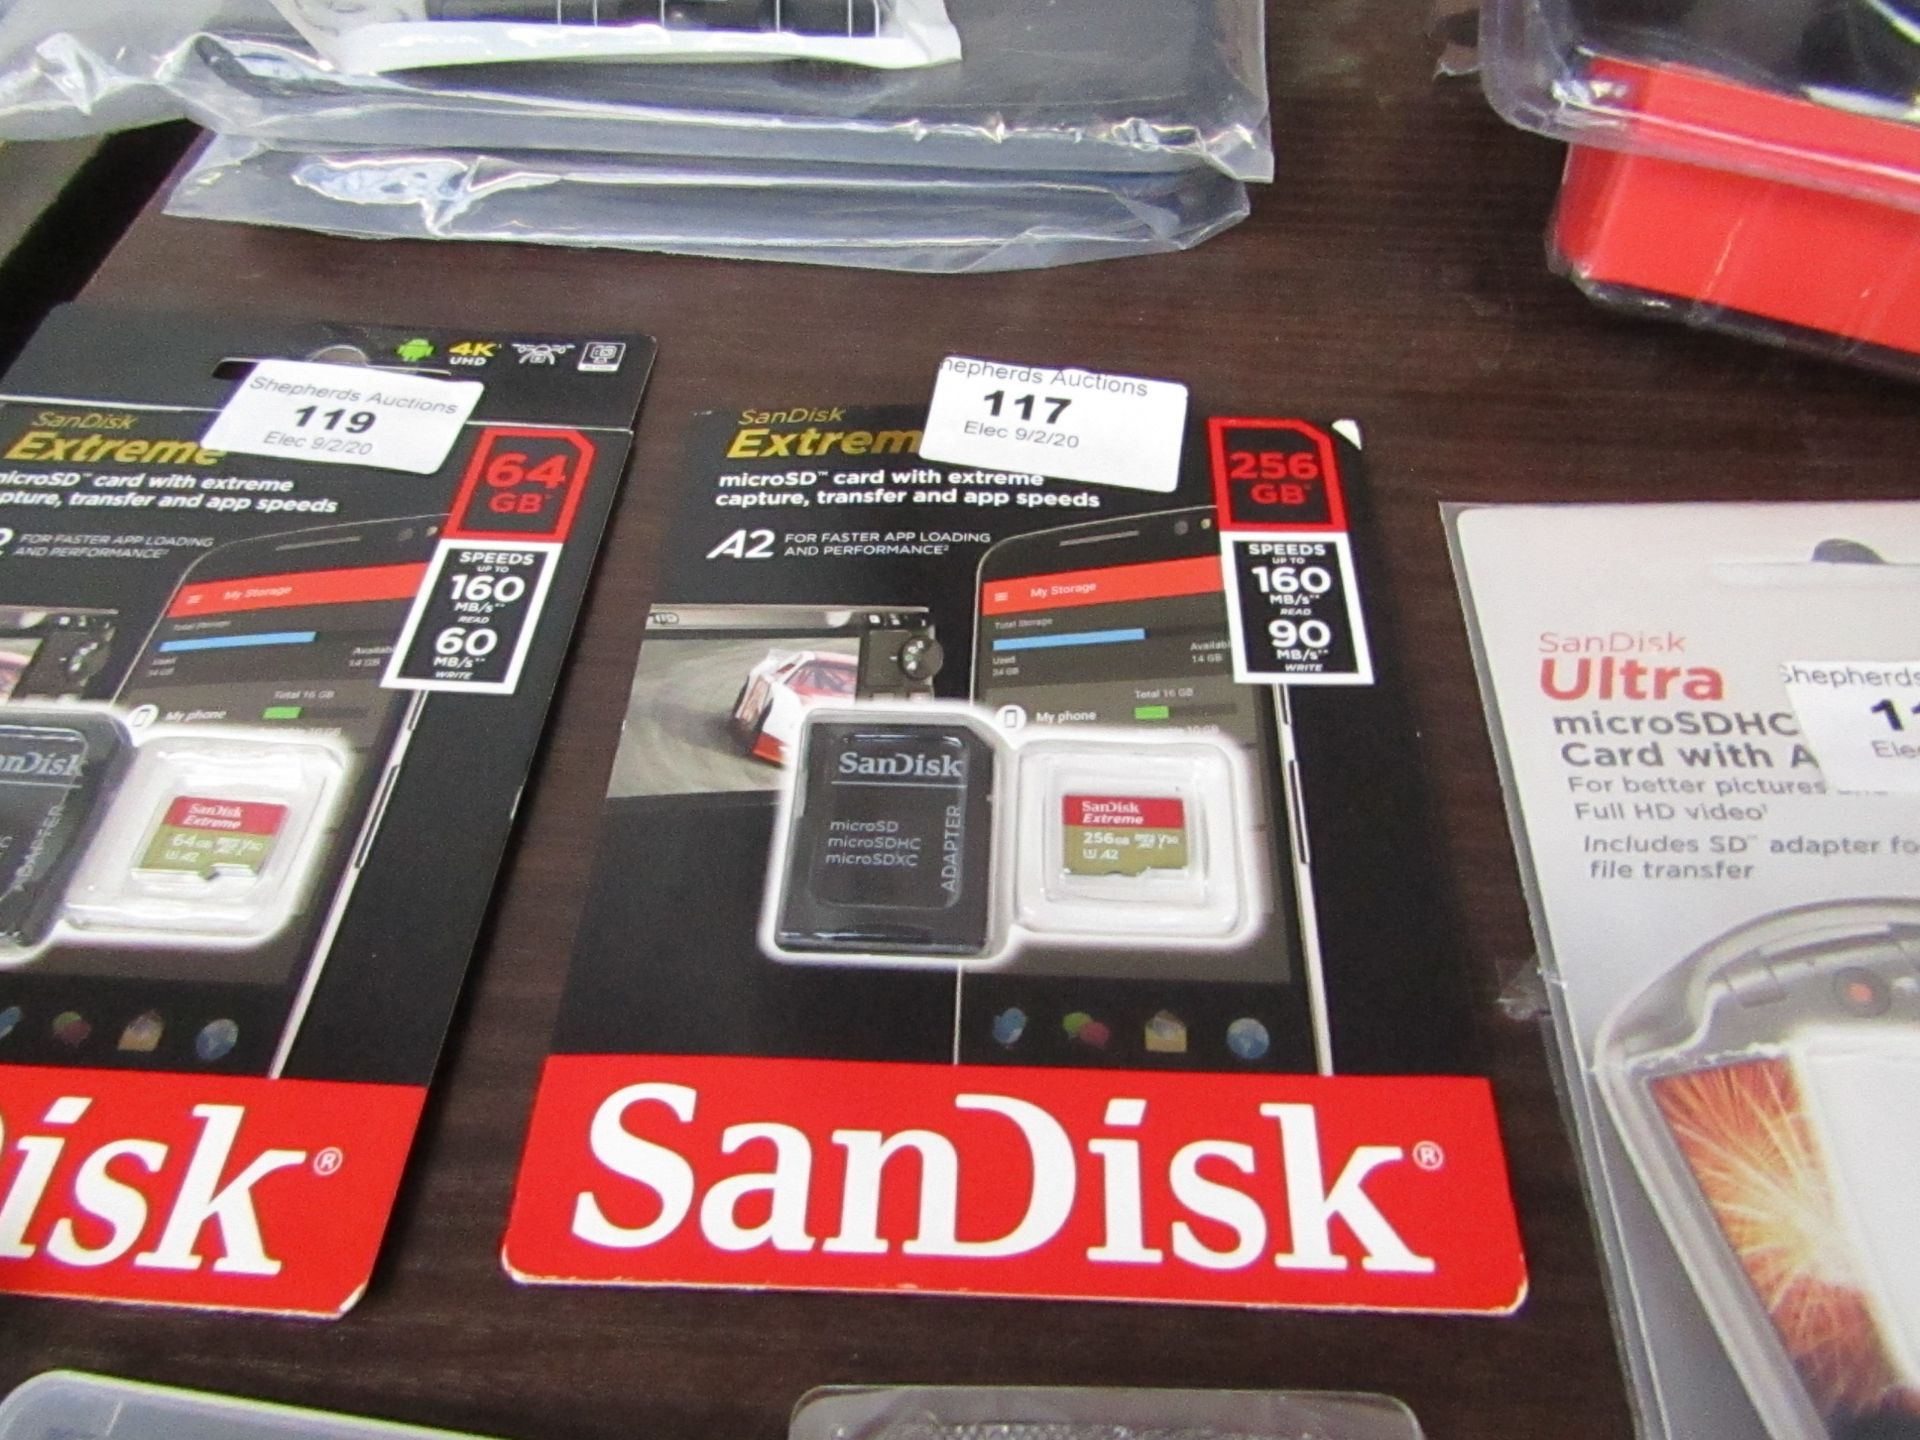 SanDisk - 256GB - MicroSD Card - Packaged.